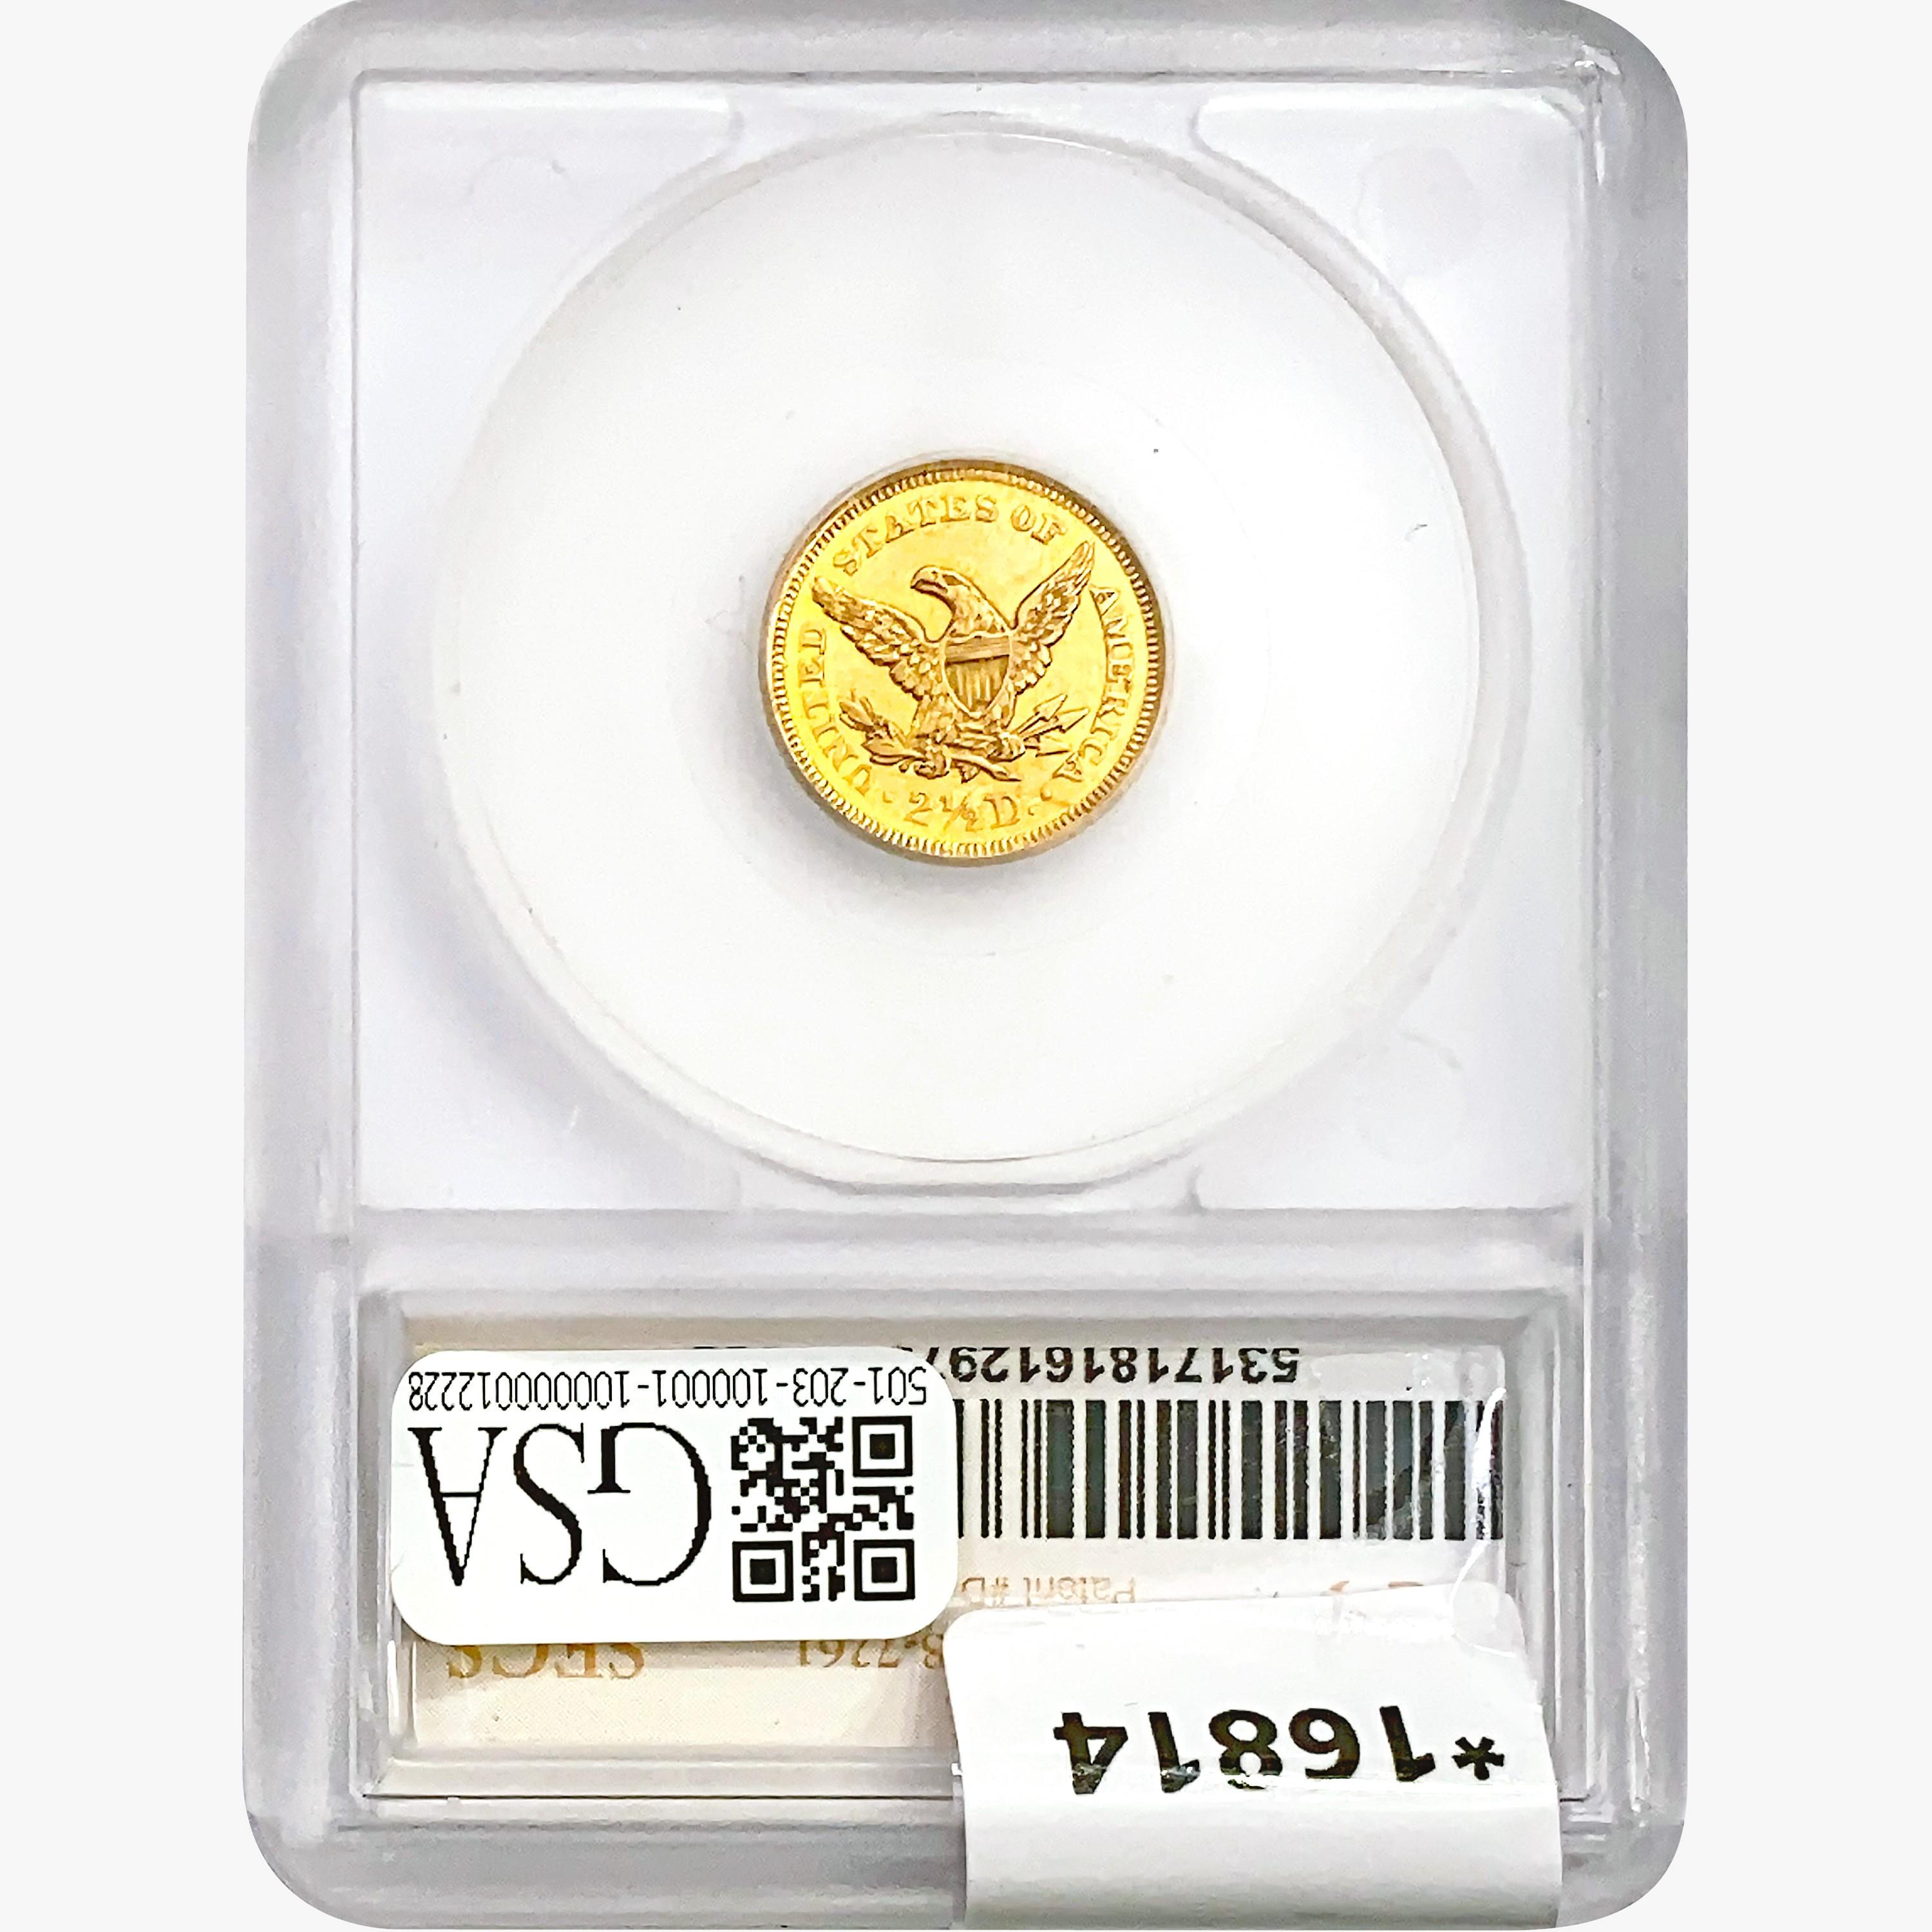 1852 $2.50 Gold Quarter Eagle SEGS MS62